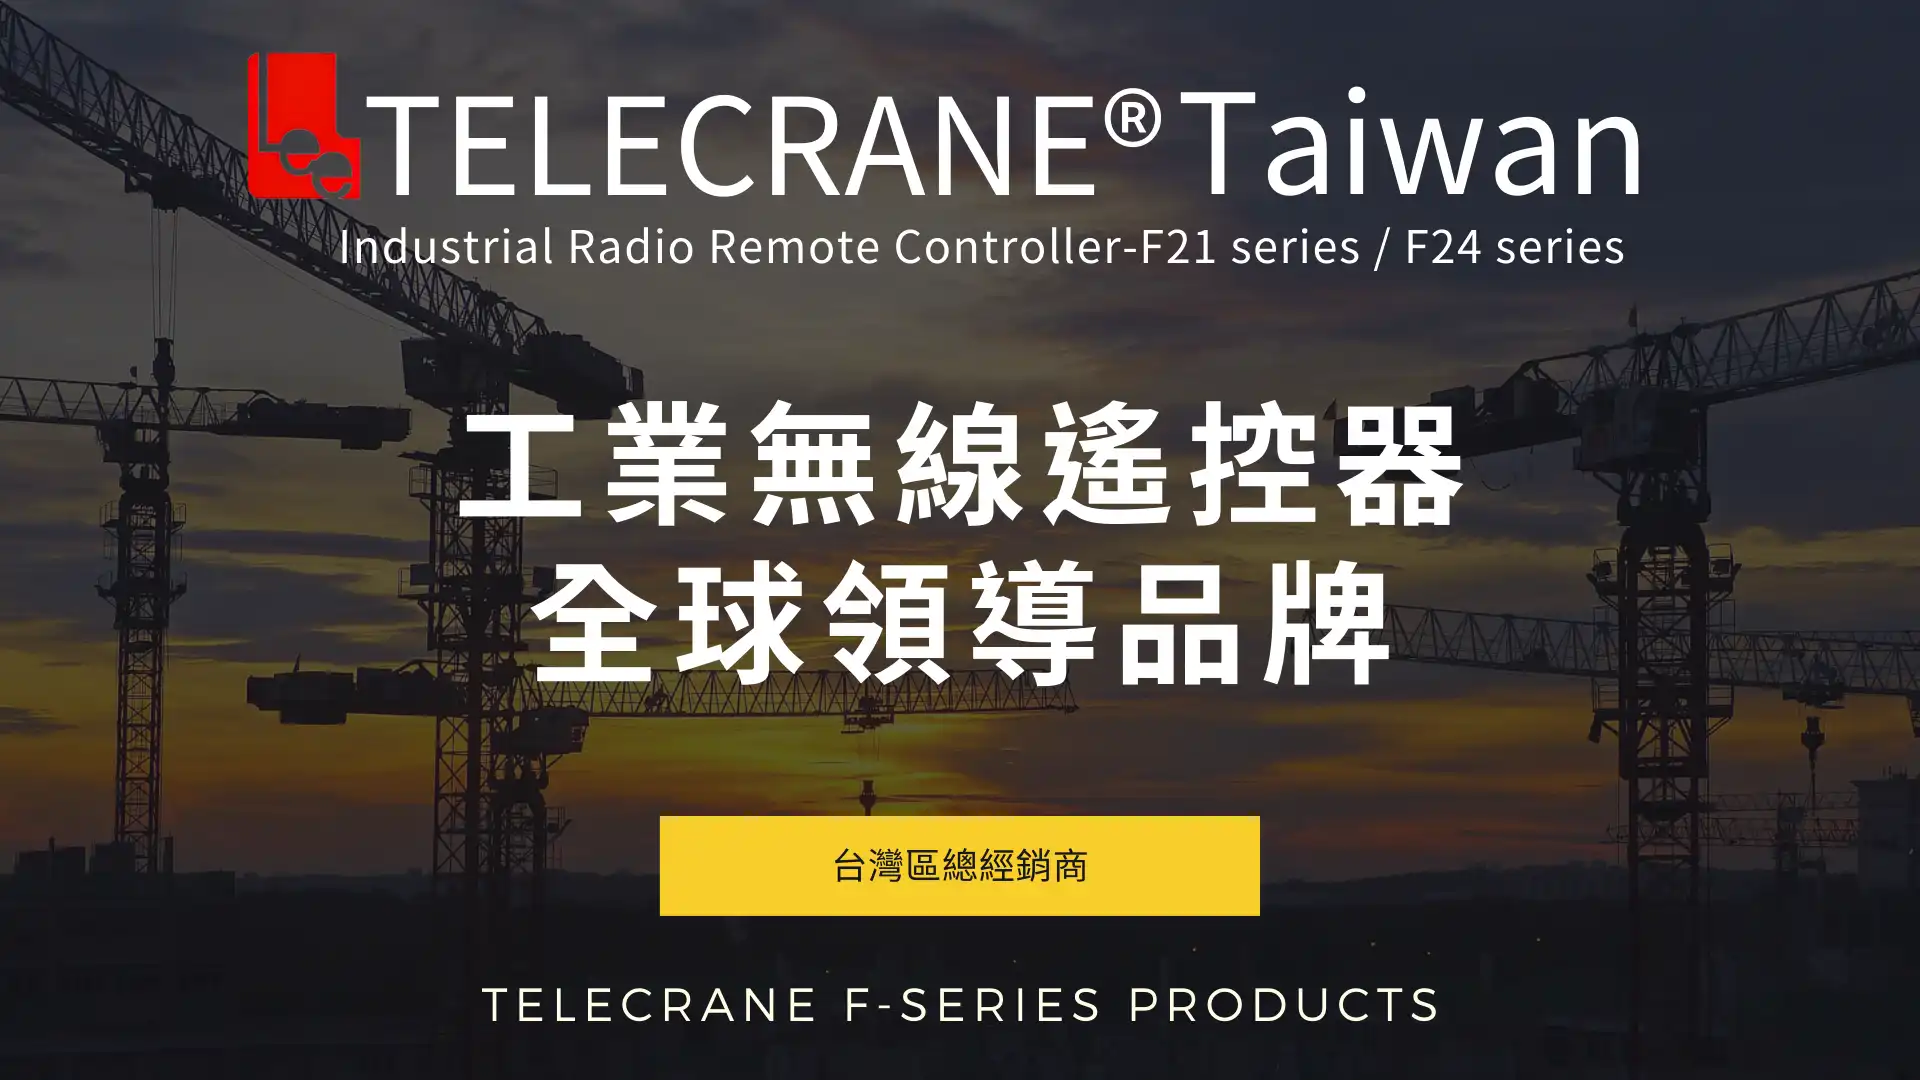 telecrane影片、關於我們、天車遙控器、吊車遙控器、F21-E1B